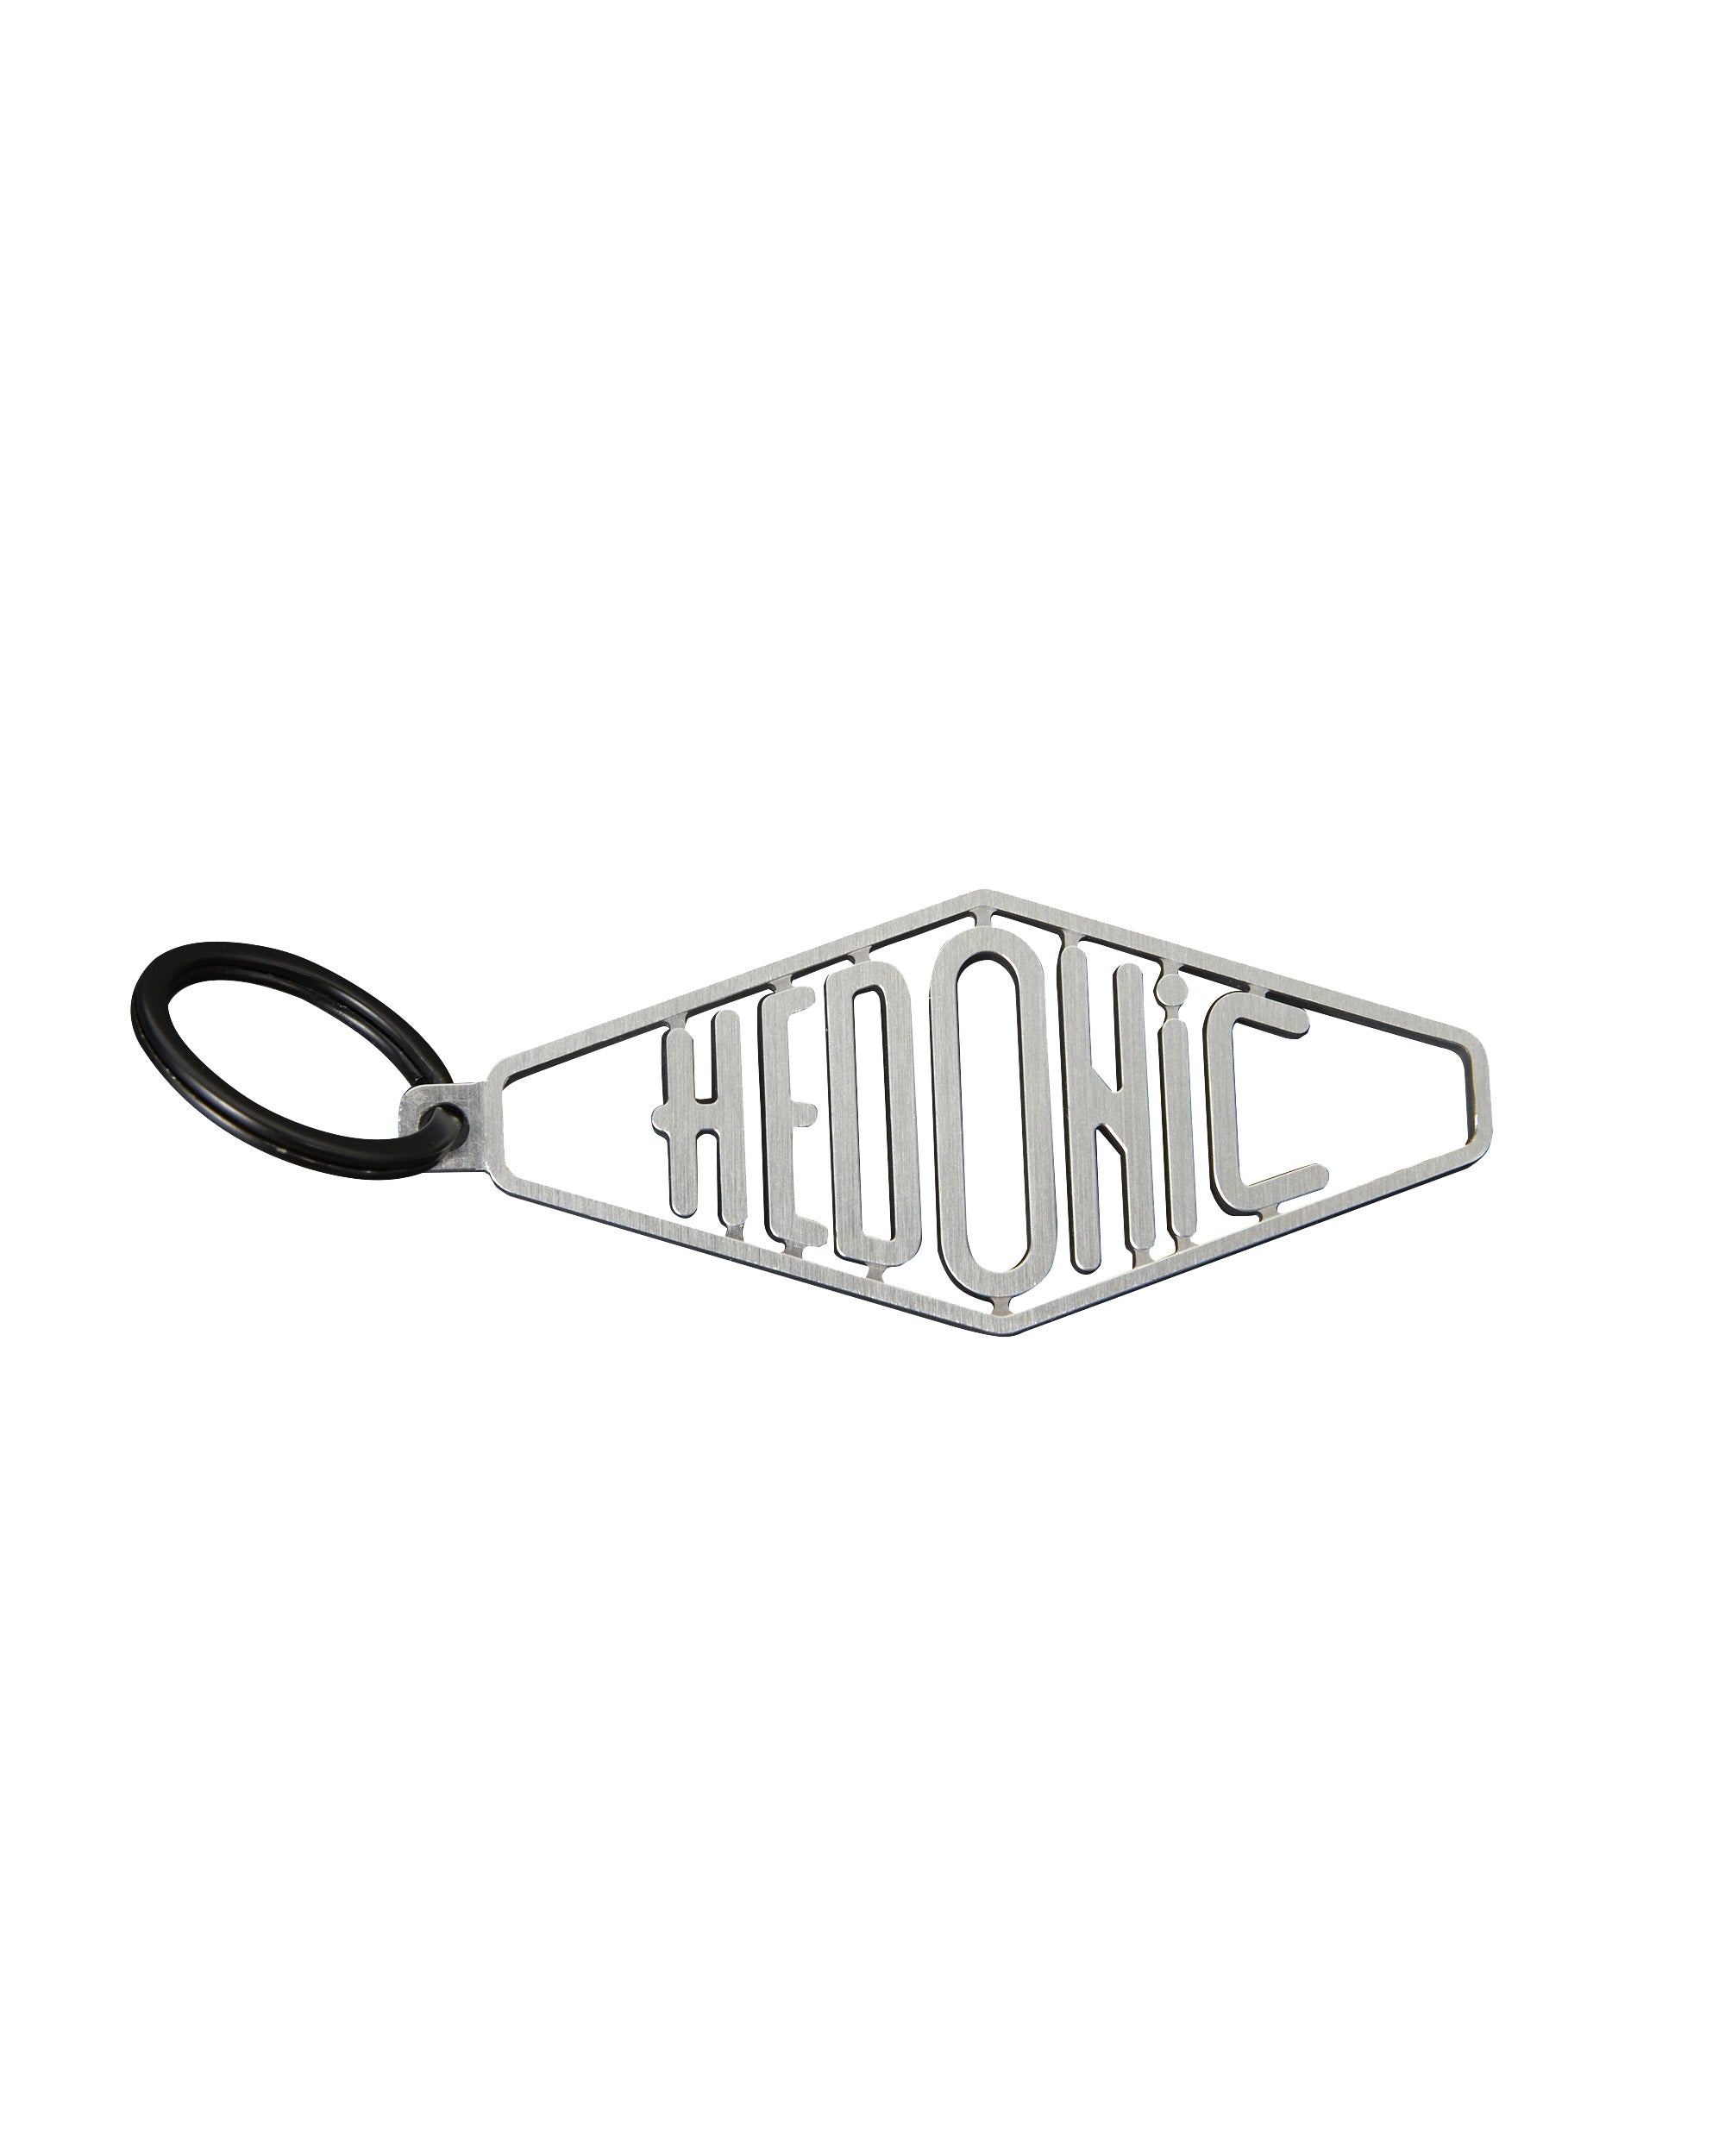 Porte-clés aluminium - Maquette Hedonic